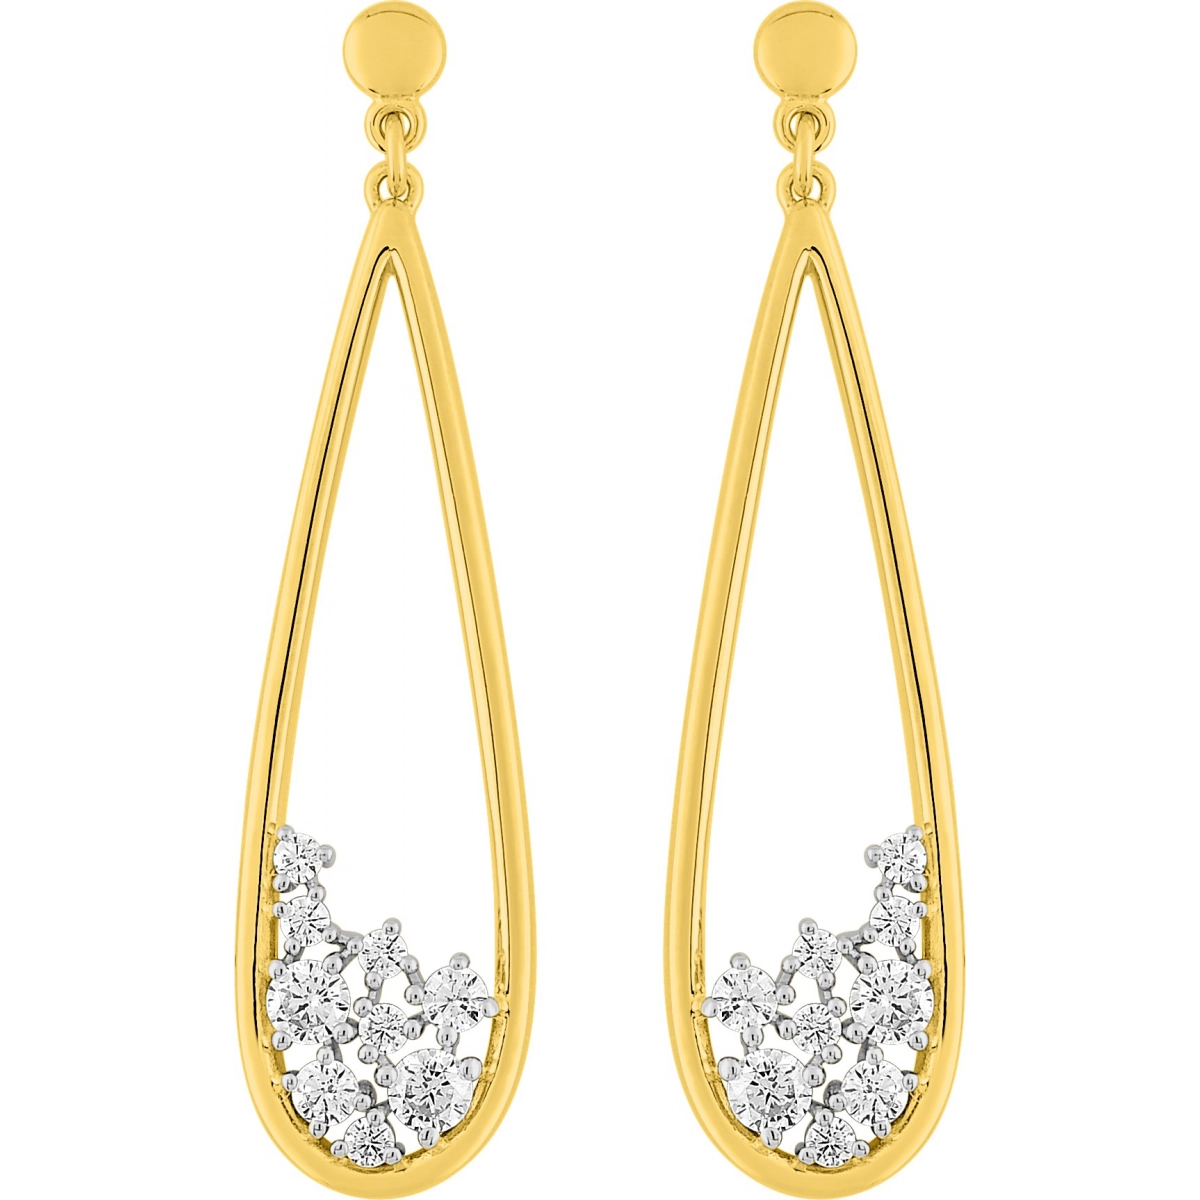 Earrings pair w. cz gold plated Brass - Size: 2TG  Lua Blanca  BSWM07Z.0